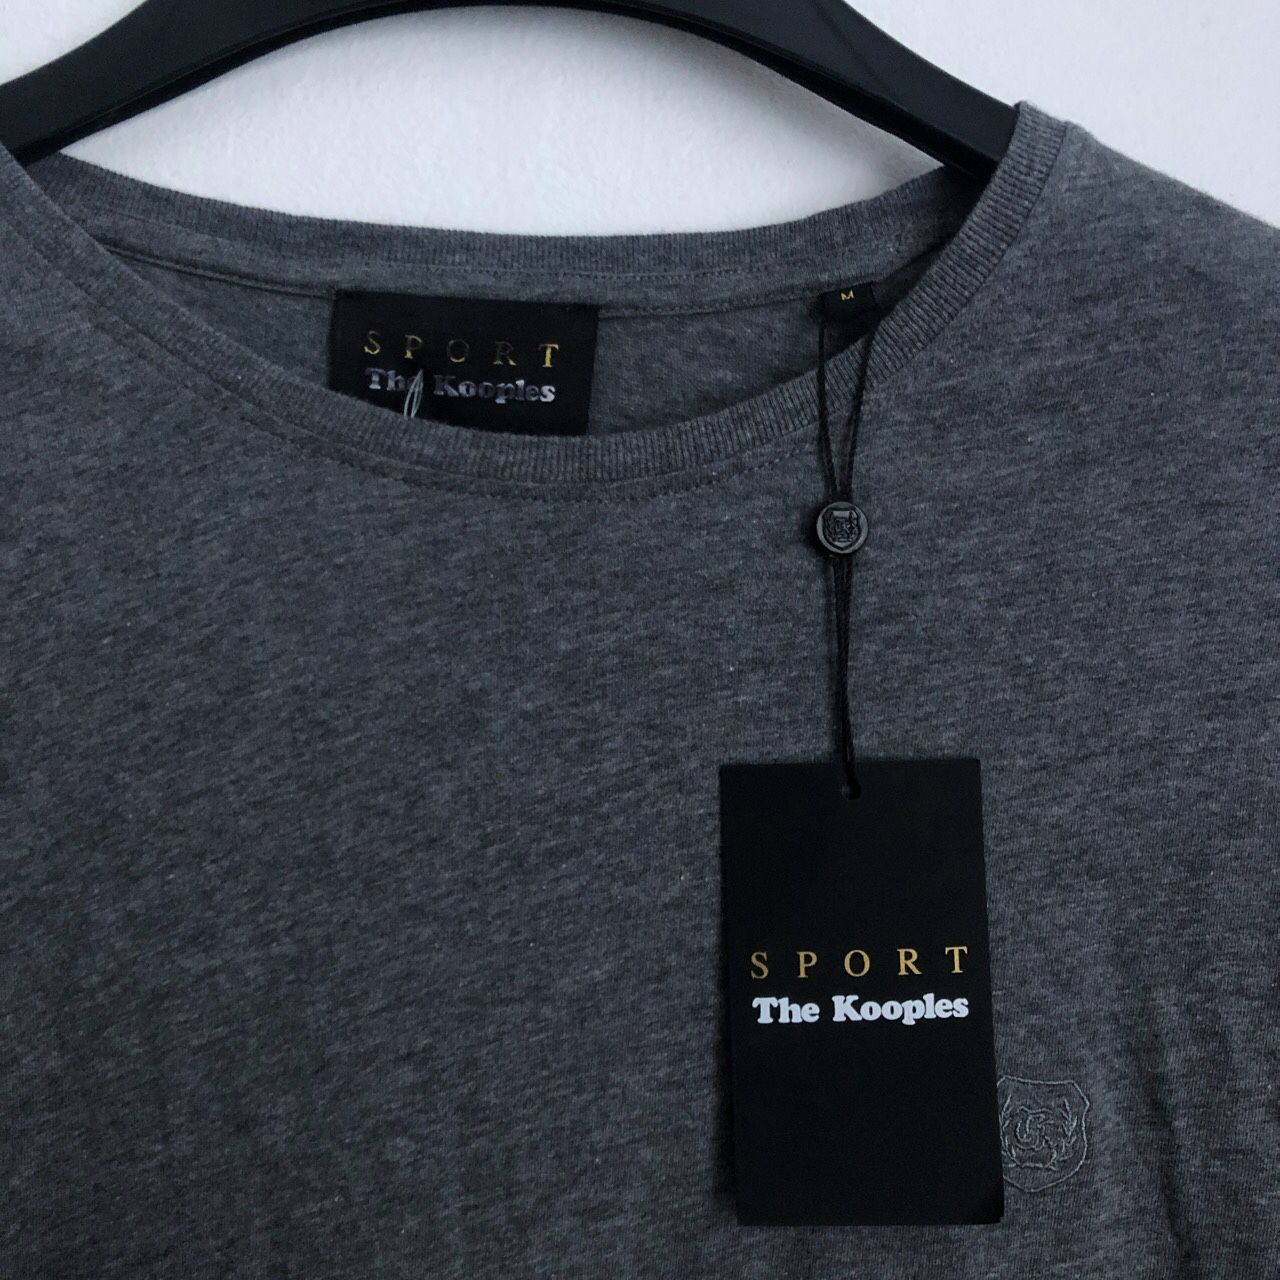 The Kooples men’s gray zipper basic T-shirt